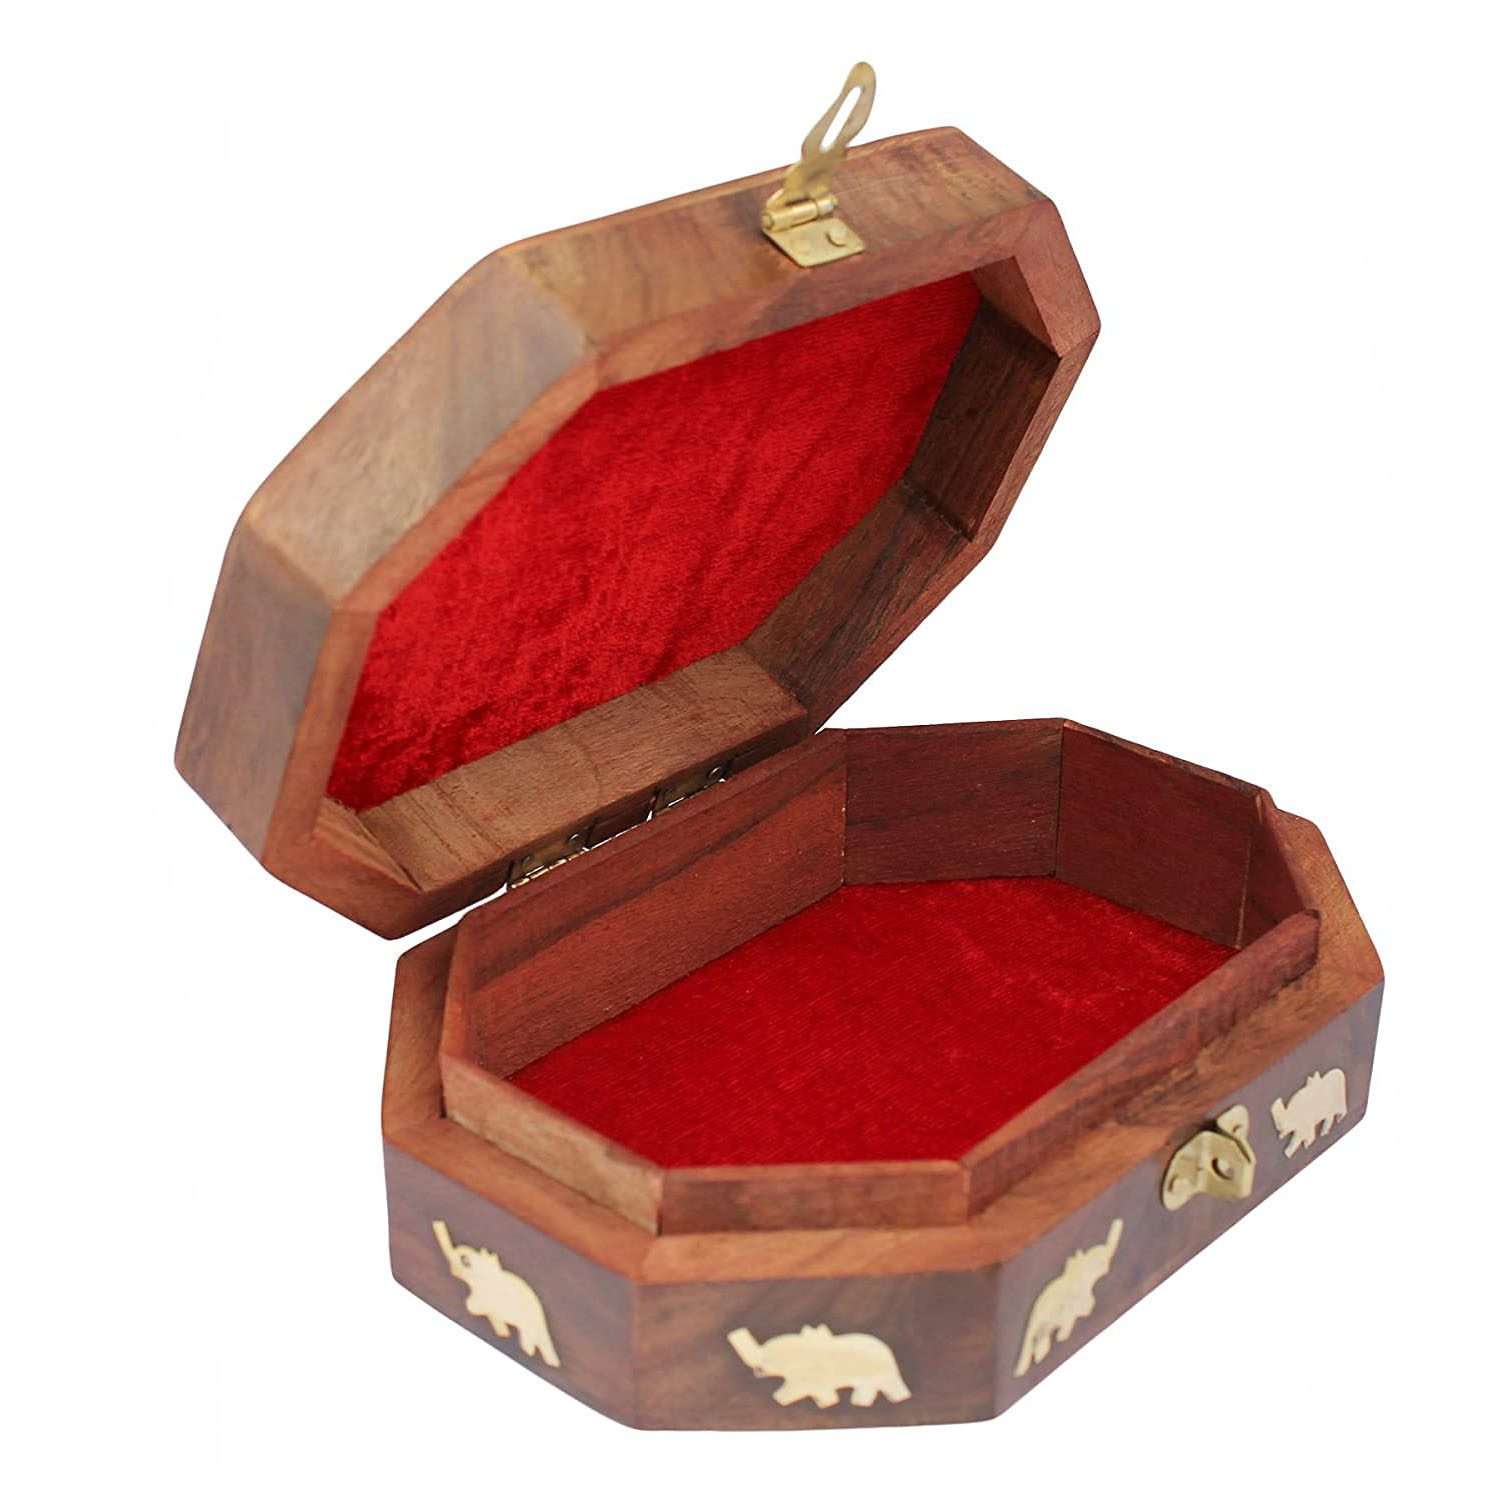 Wooden Jewelry Box Makeup and Organizer | Women Ring Storage | Earring Bracelet Organizer | Multipurpose Usage